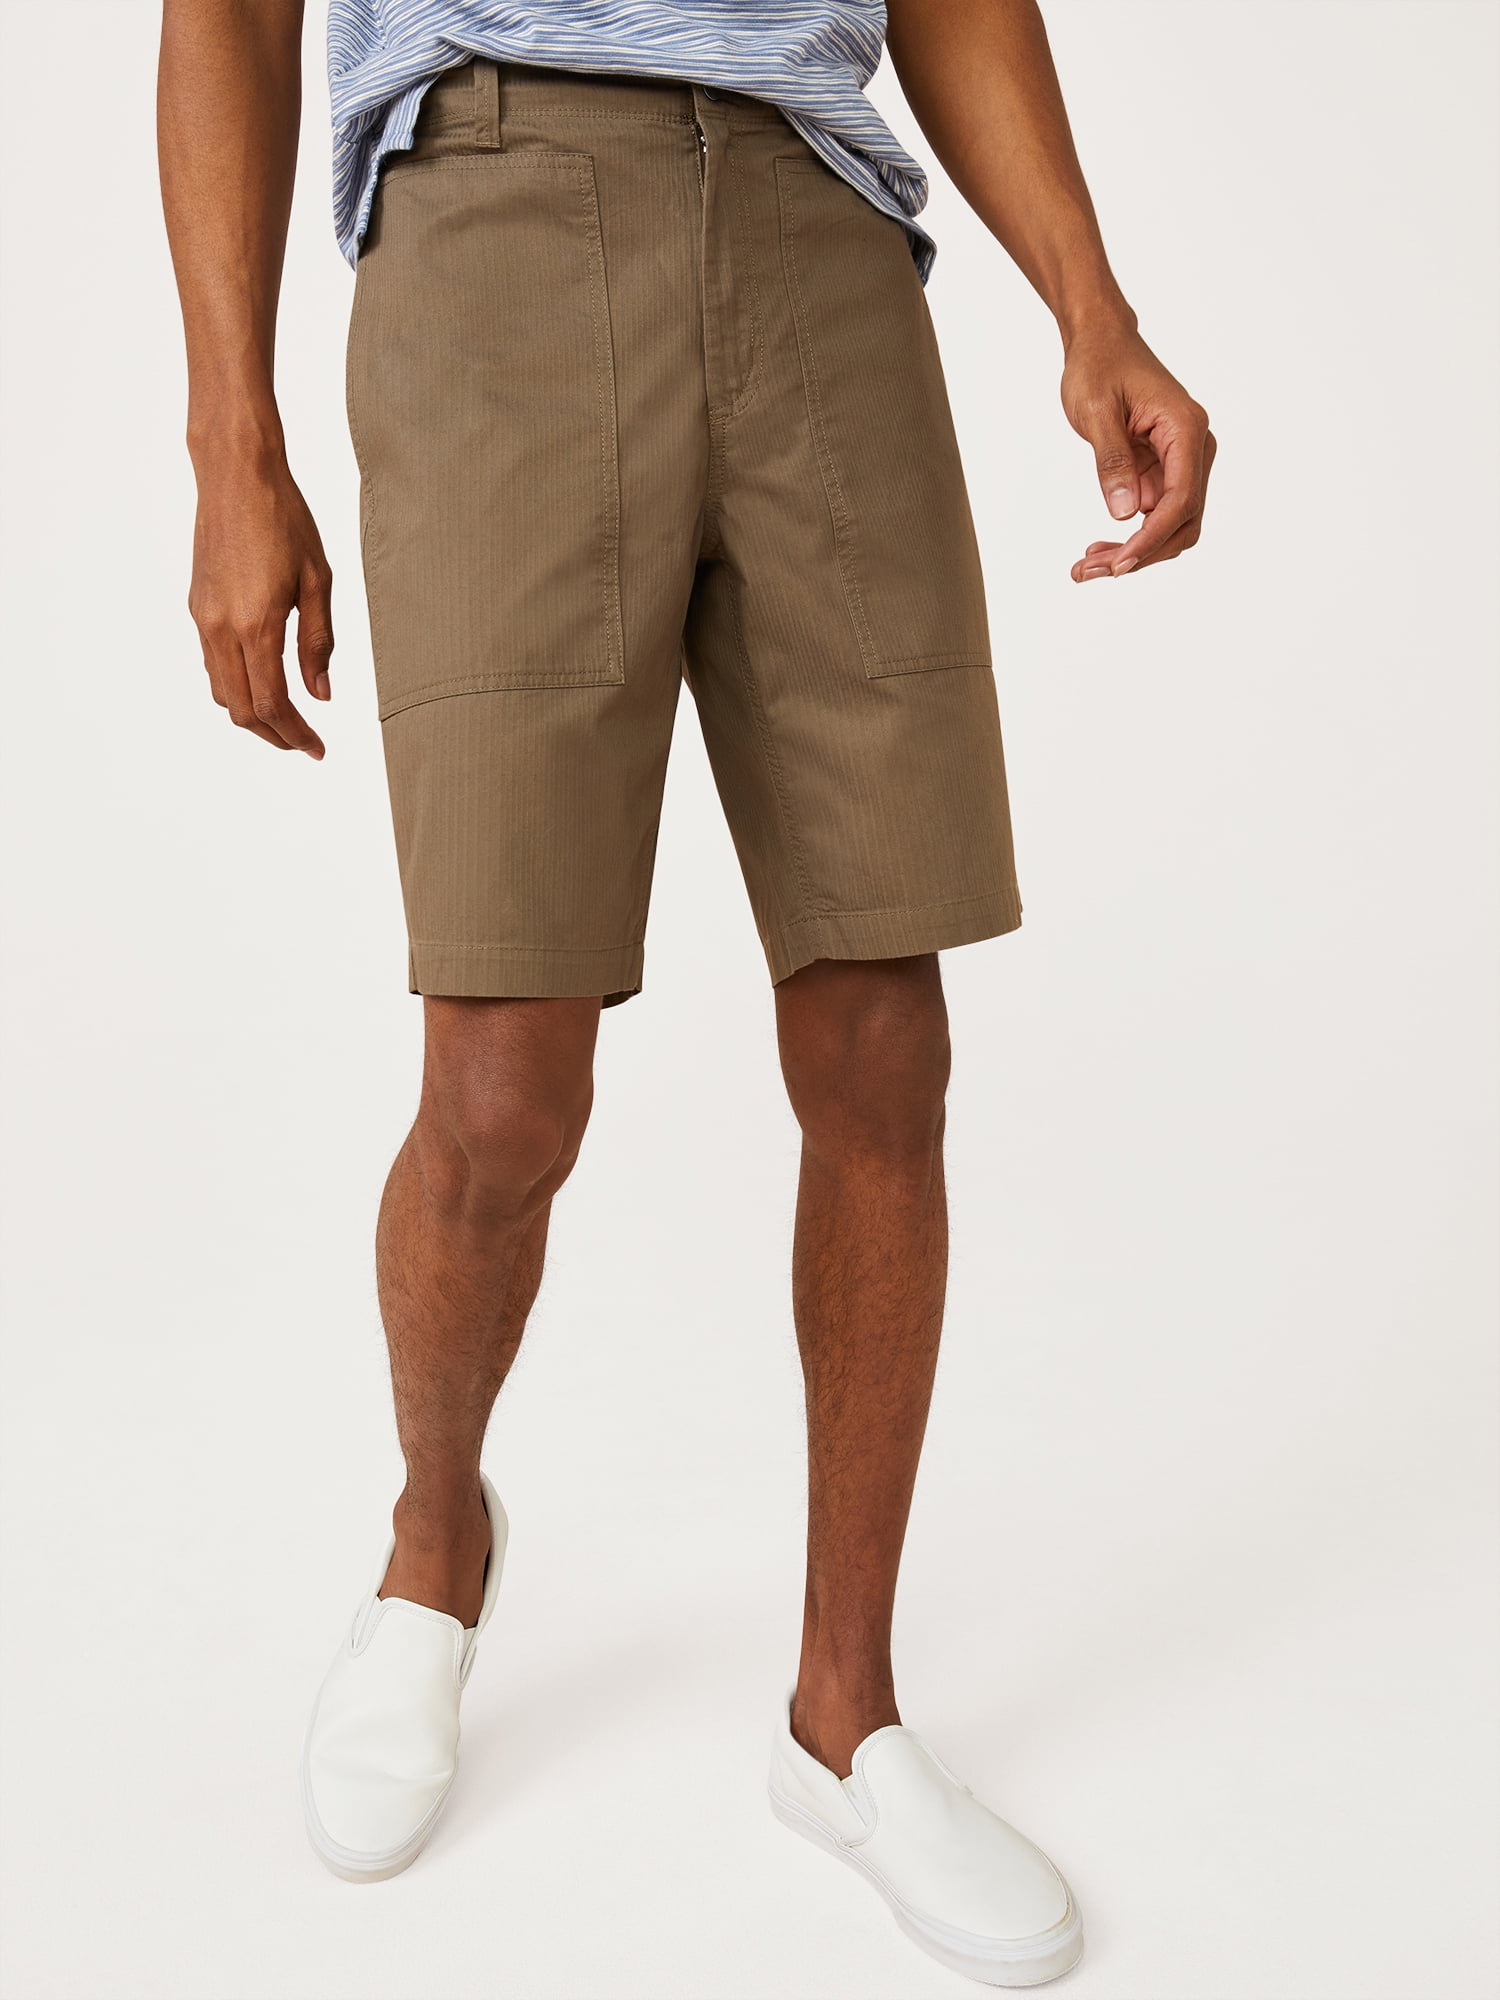 Free Assembly Men's Utility Pocket Shorts - Walmart.com